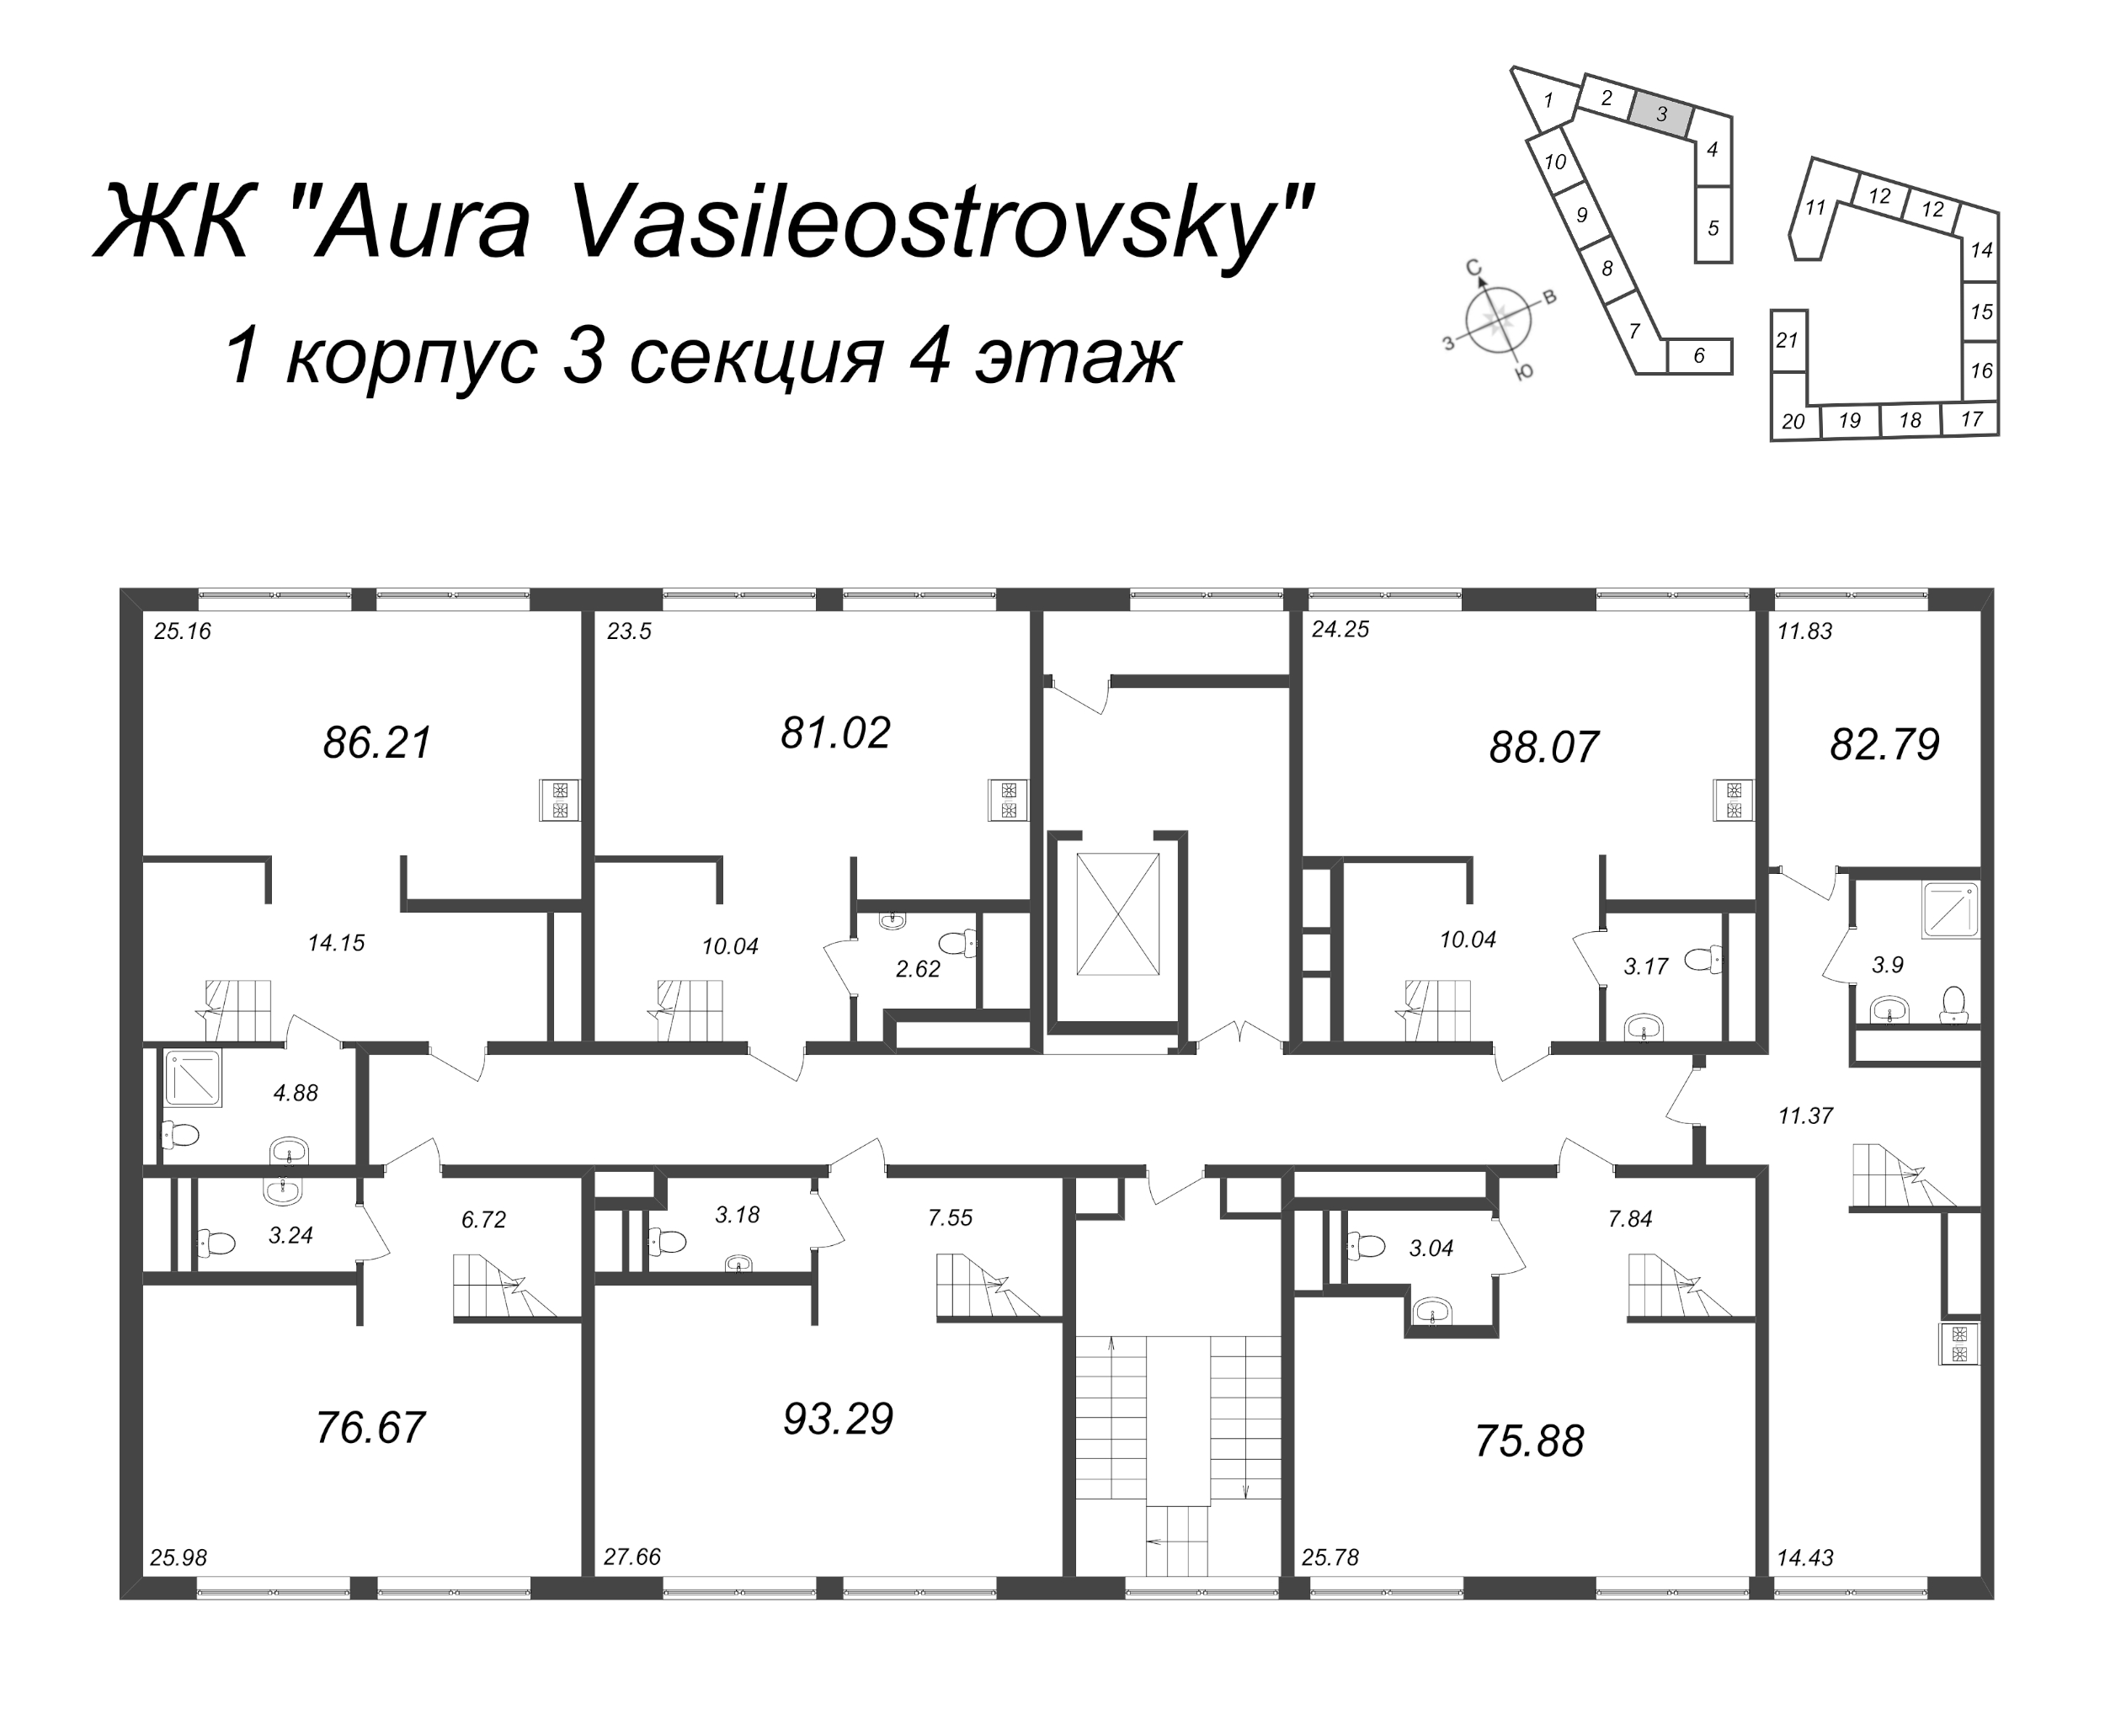 3-комнатная (Евро) квартира, 76.67 м² - планировка этажа